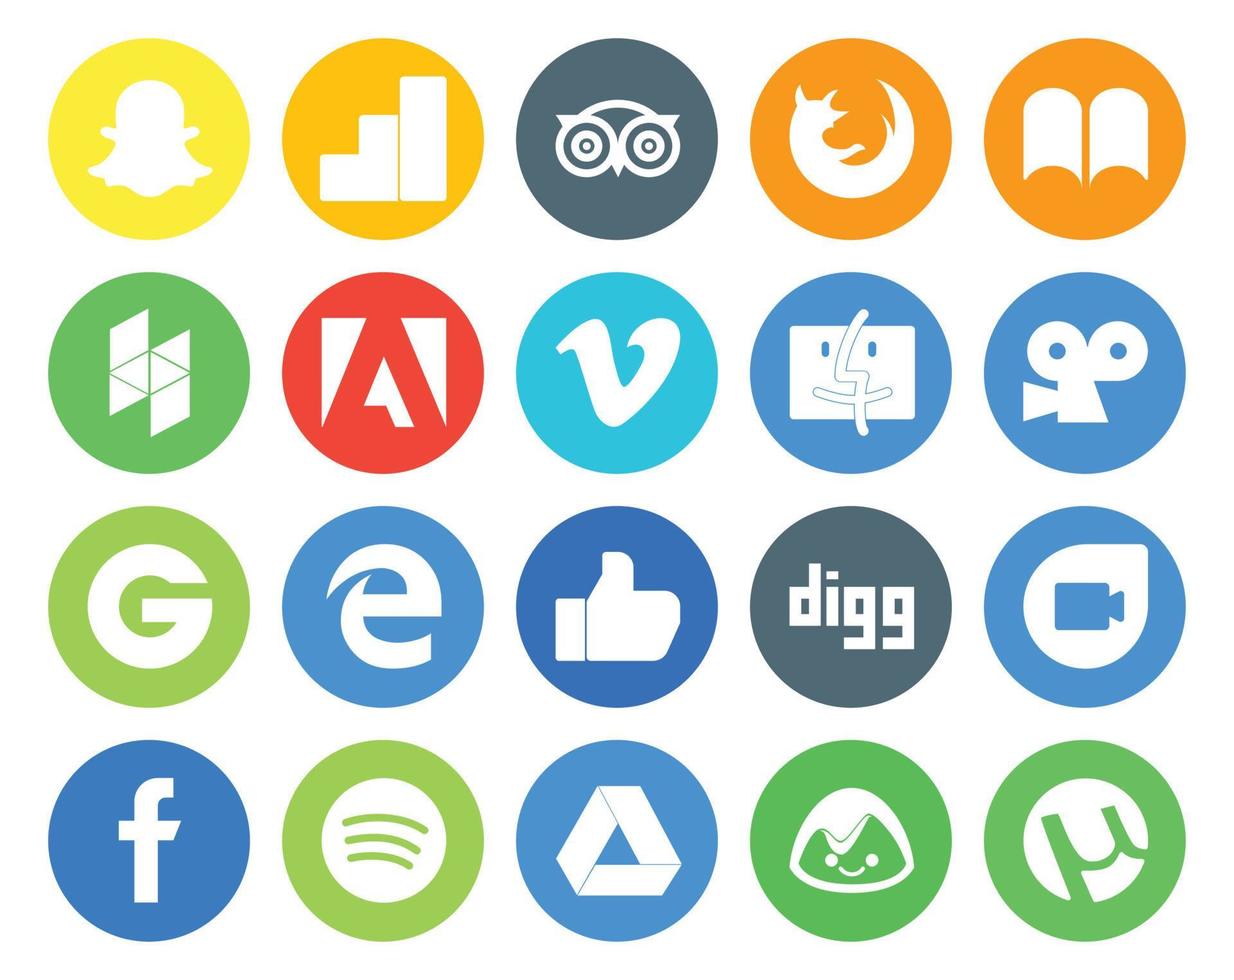 Paquete de 20 íconos de redes sociales que incluye dúo de Google como adobe edge viddler vector